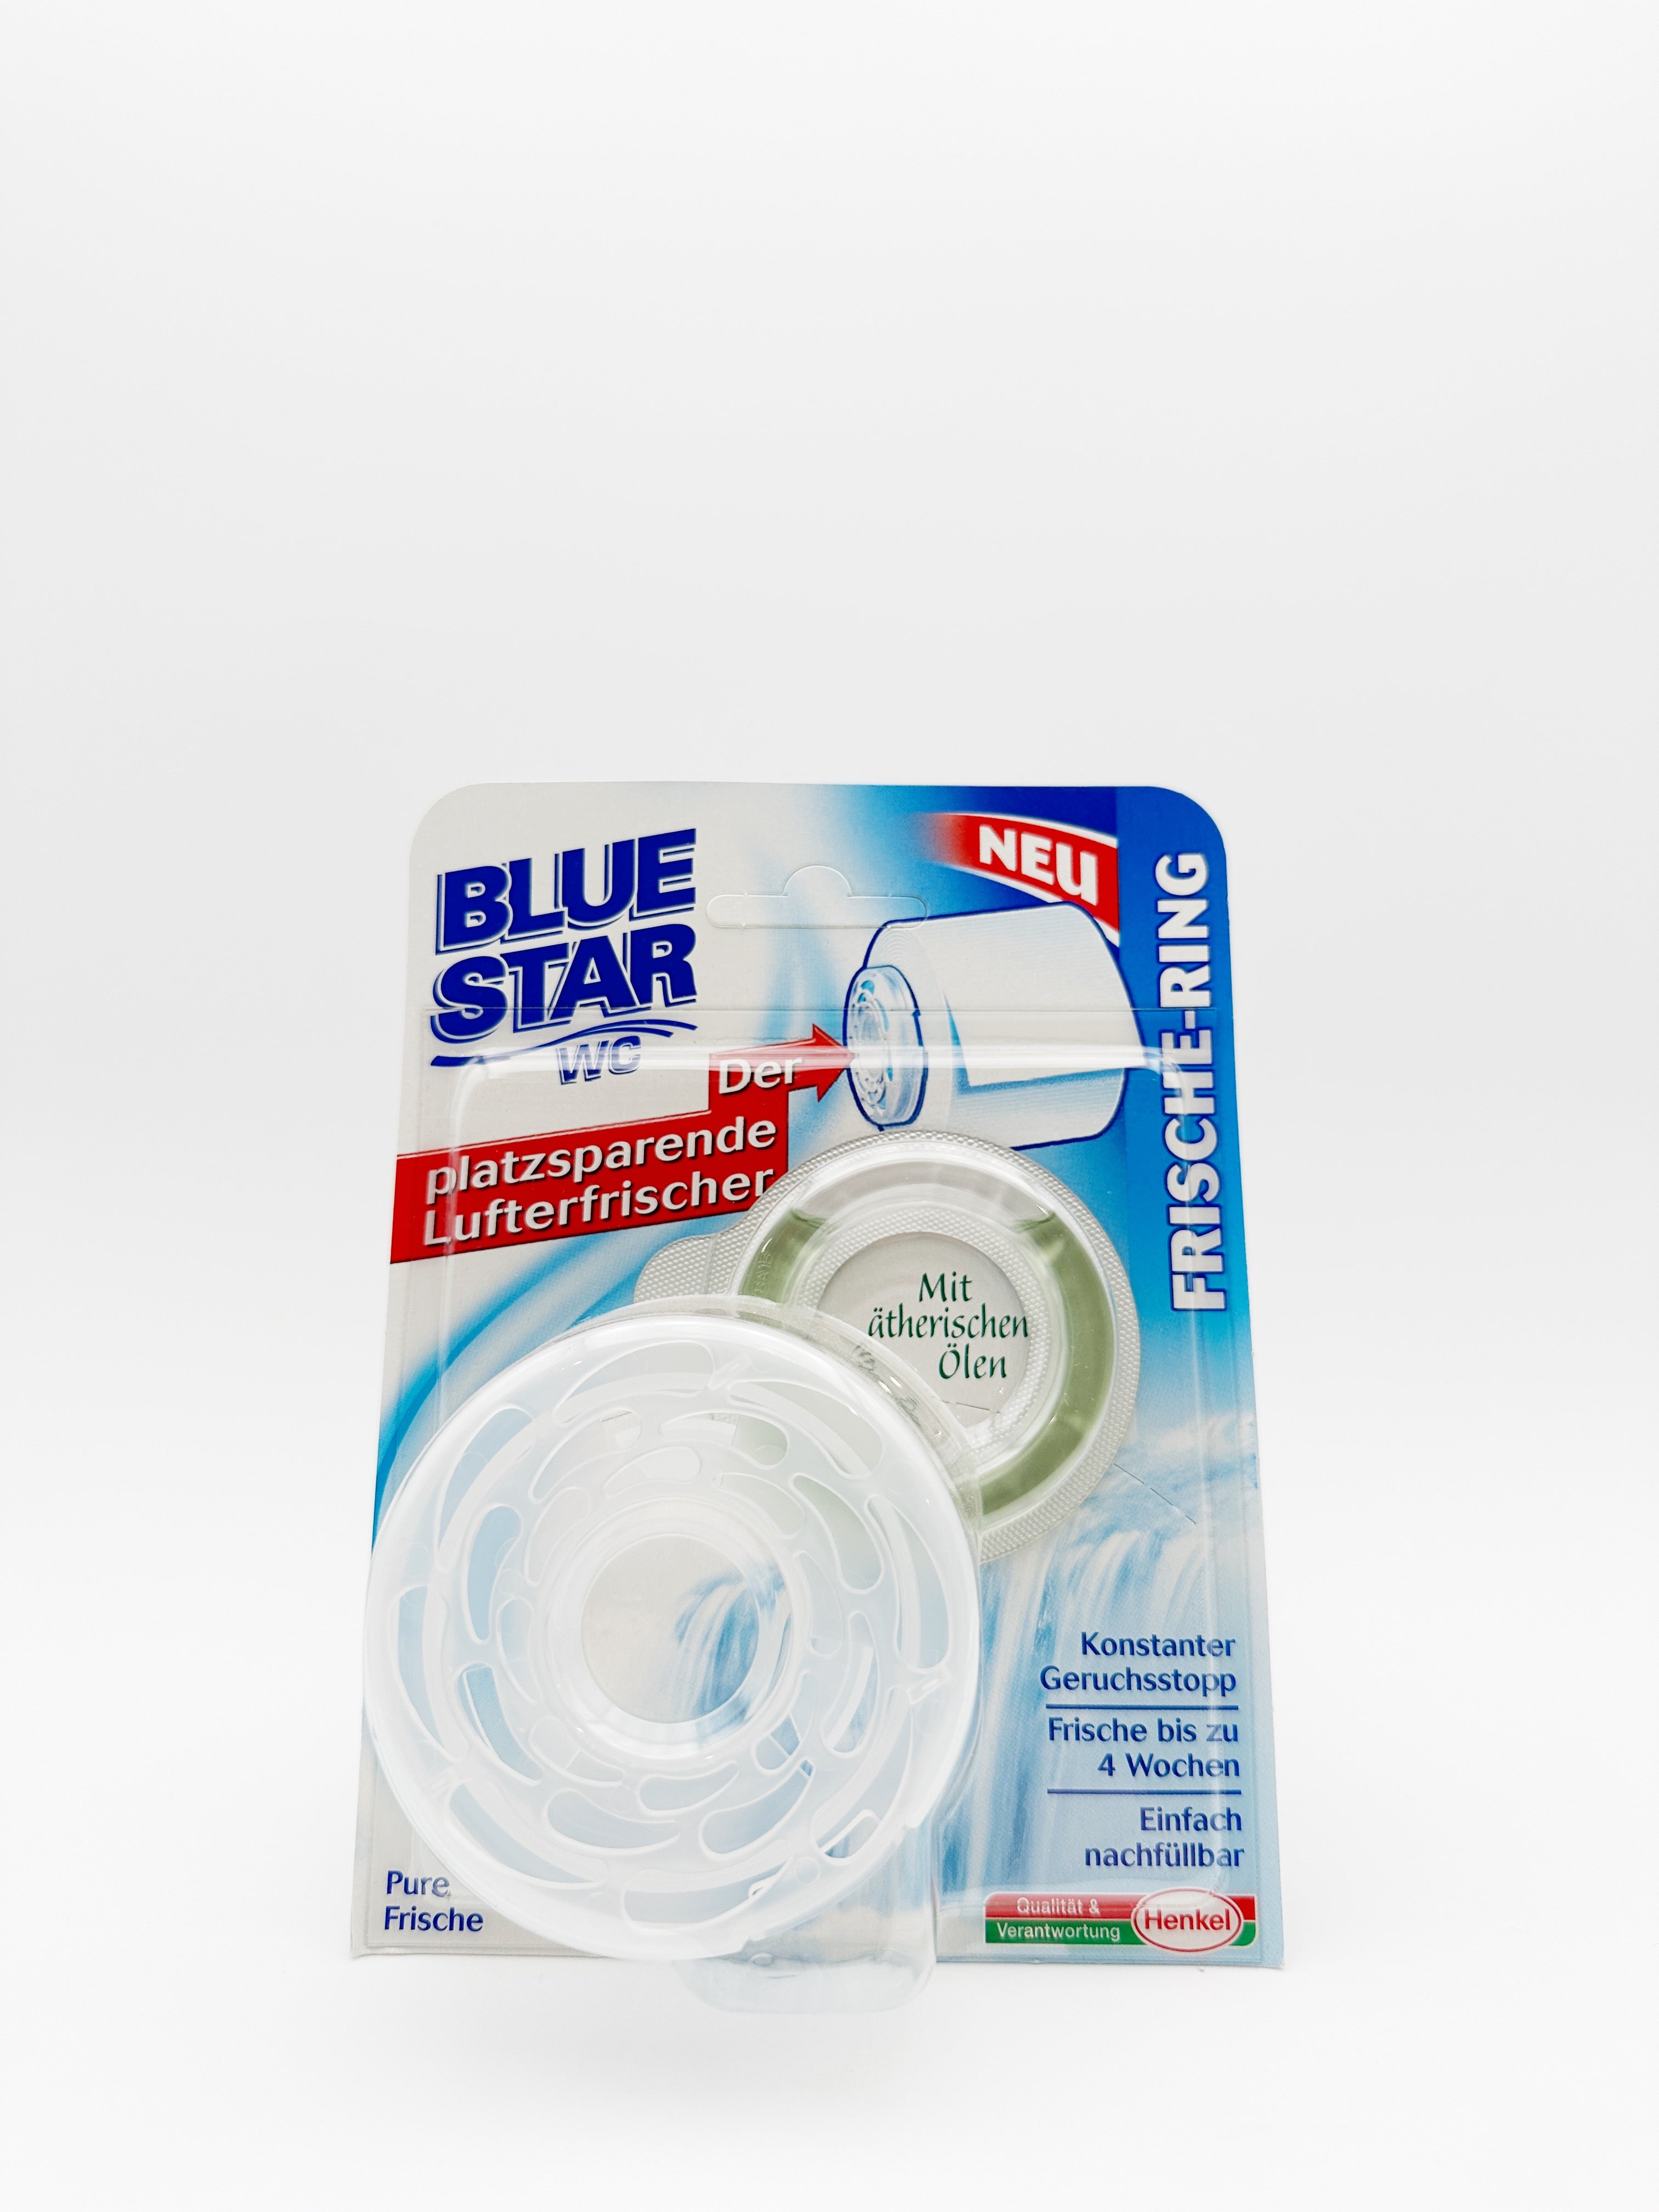 Blue Star Original Pure Frische